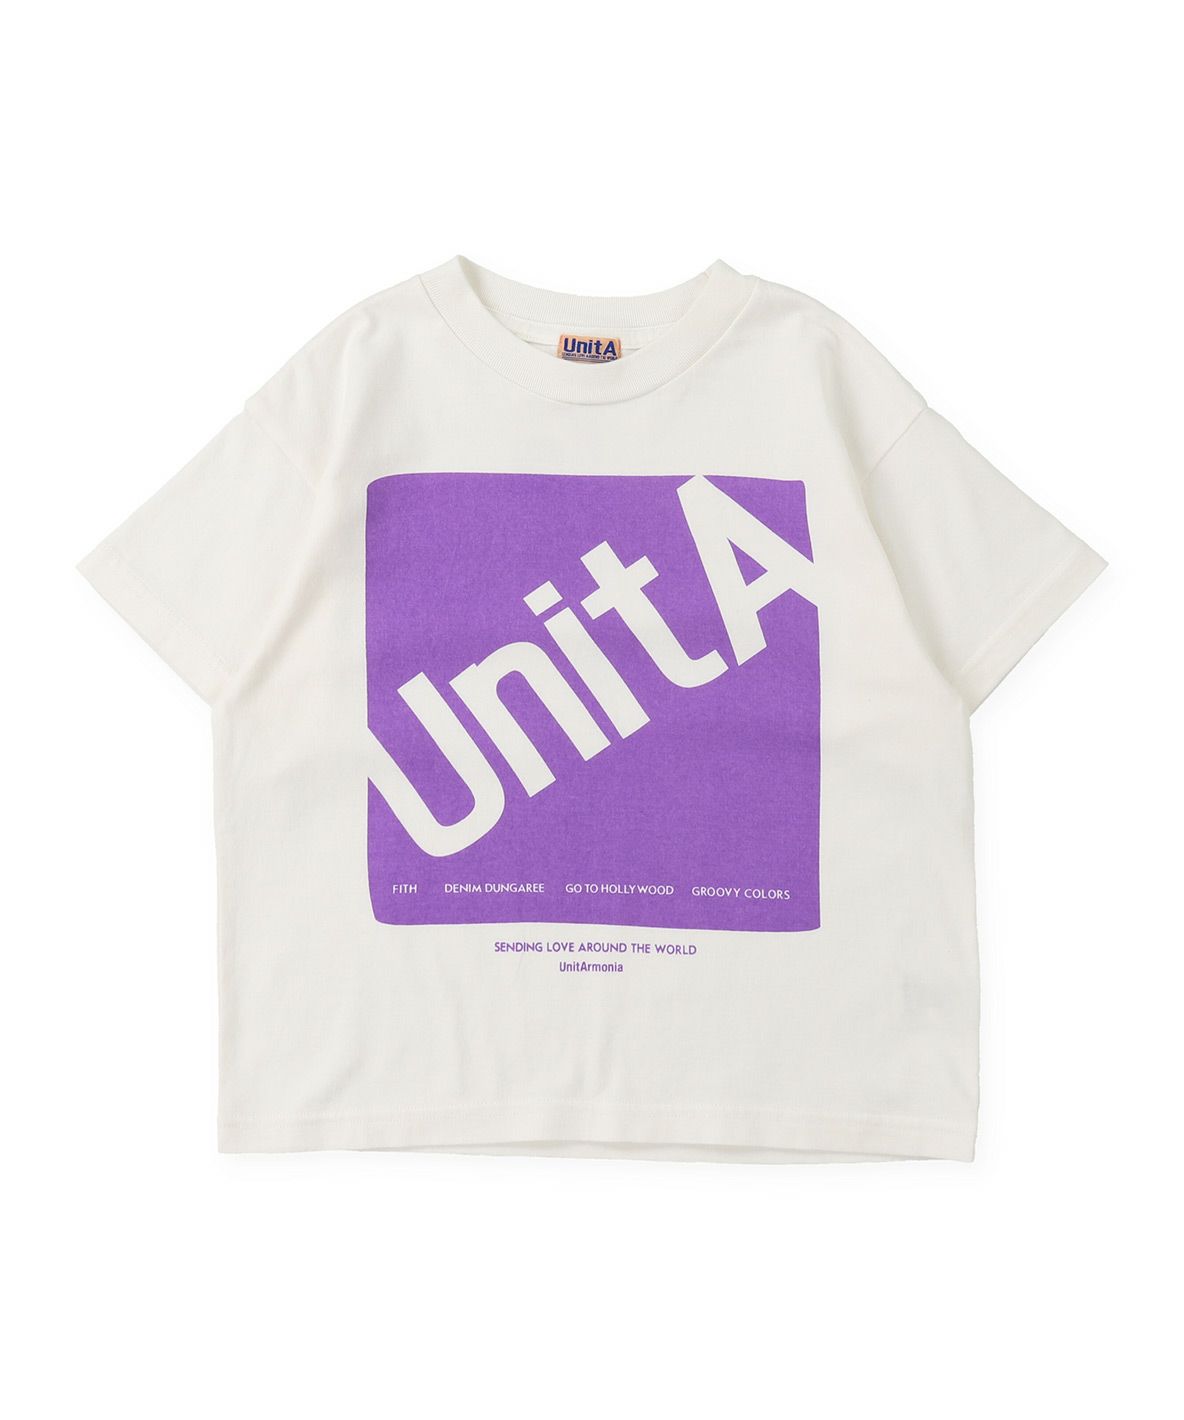 UnitA – FITH ONLINE STORE